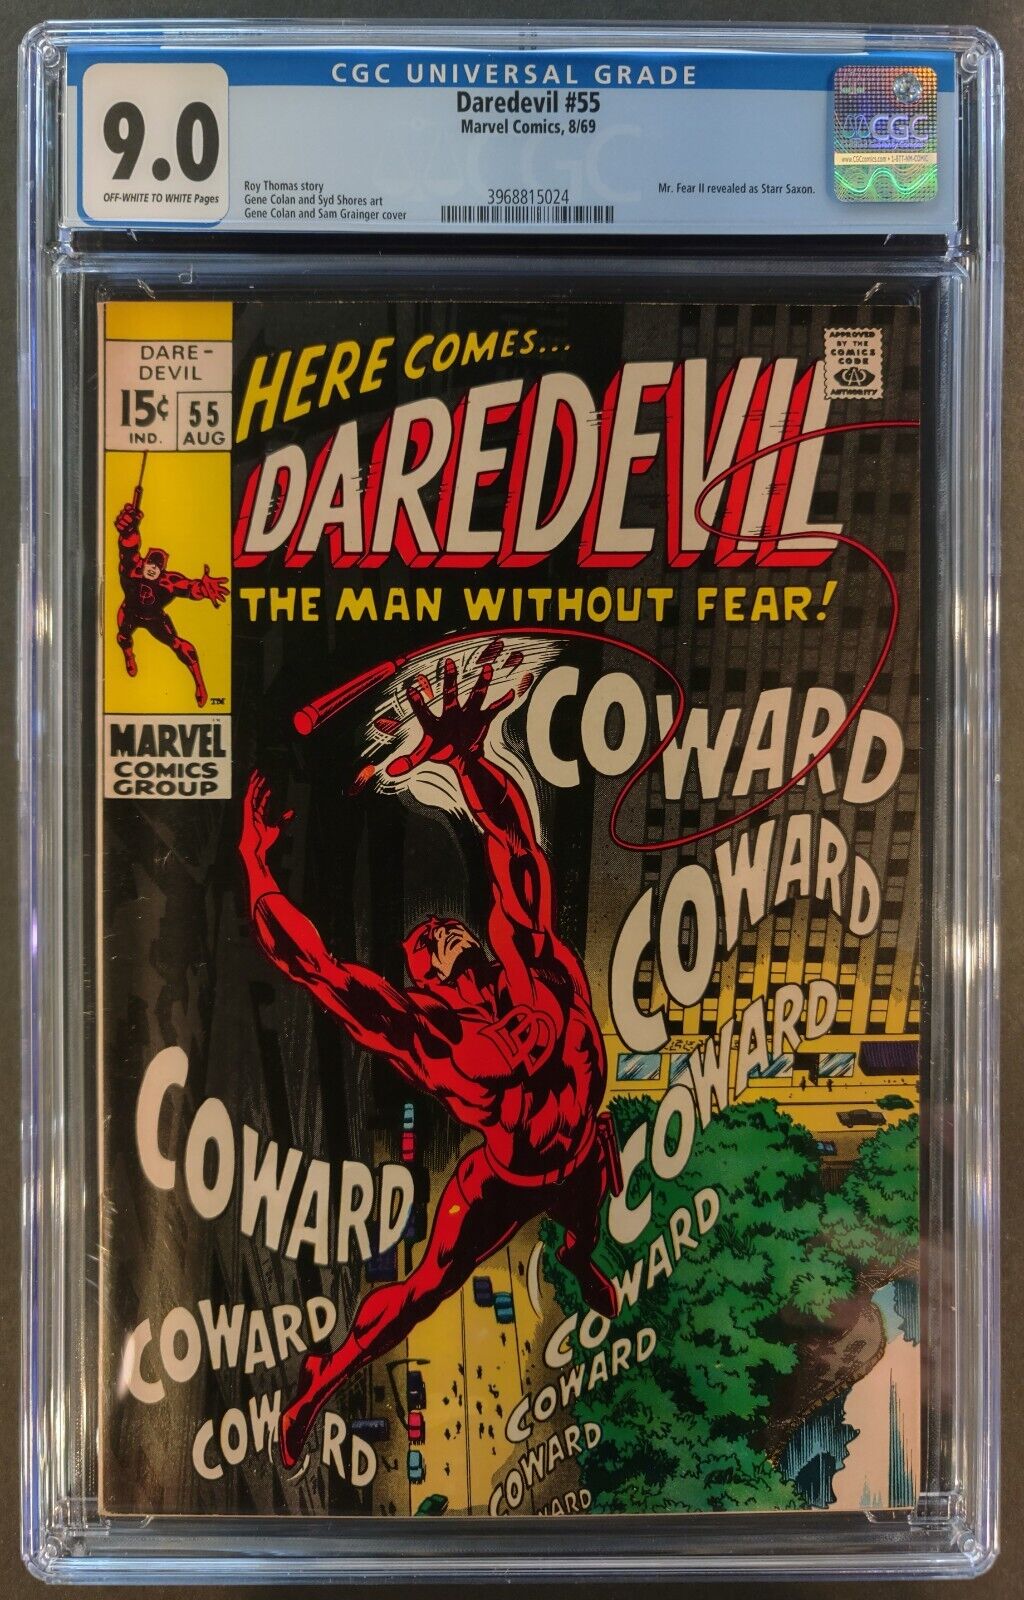 DAREDEVIL #55 CGC 9.0 OW-W MARVEL COMICS 1969 - MR FEAR REVEALED AS STARR SAXON